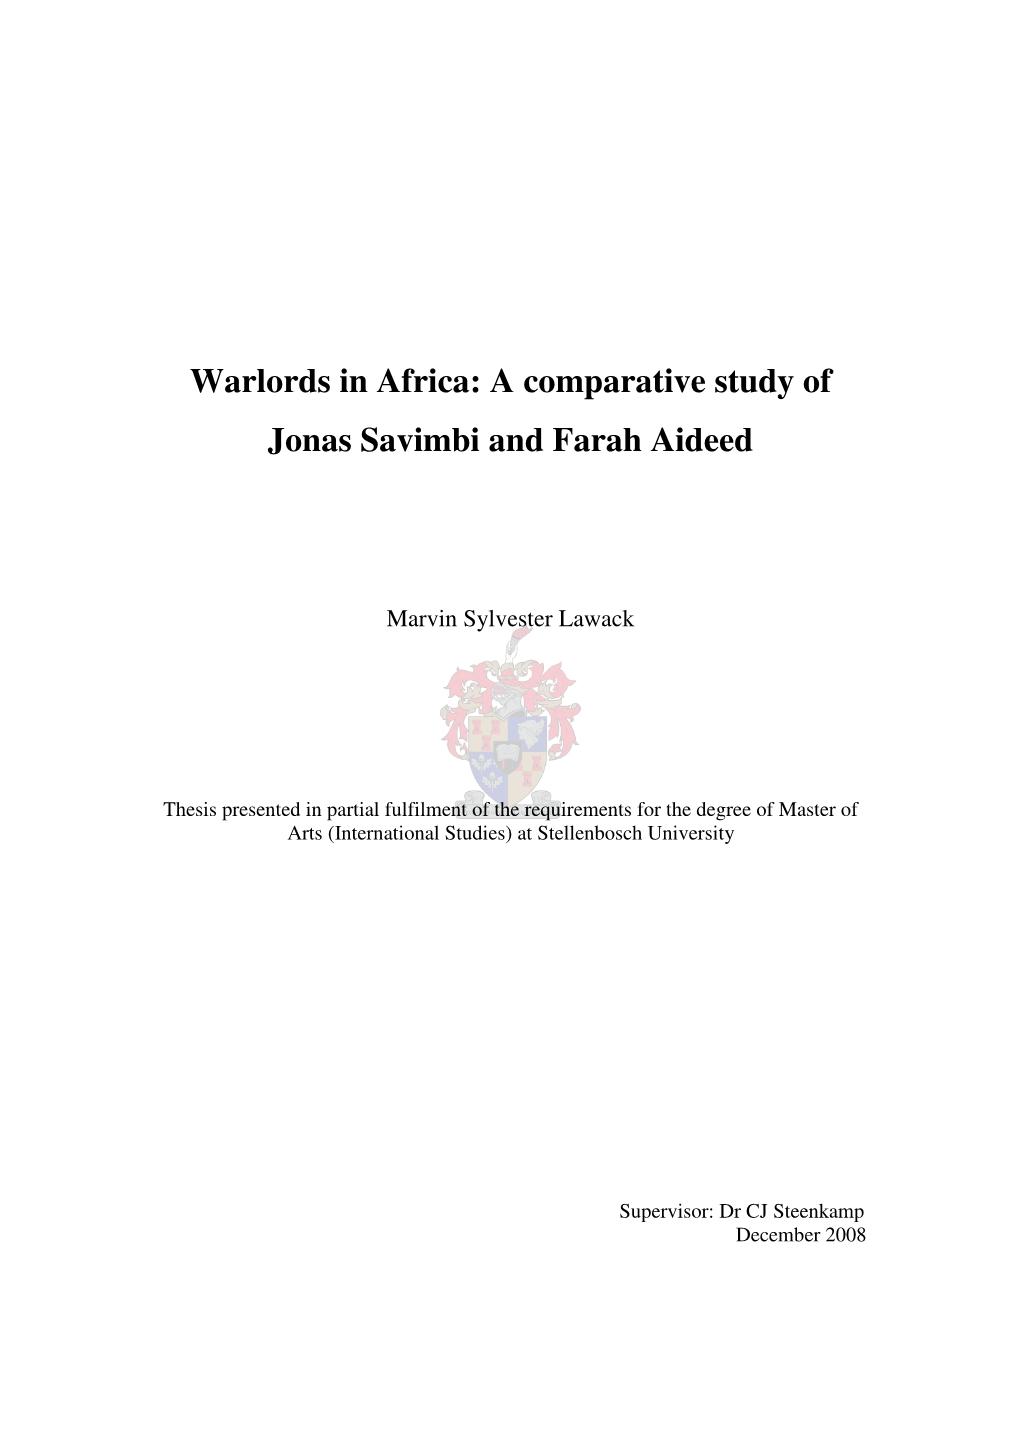 Warlords in Africa: a Comparative Study of Jonas Savimbi and Farah Aideed